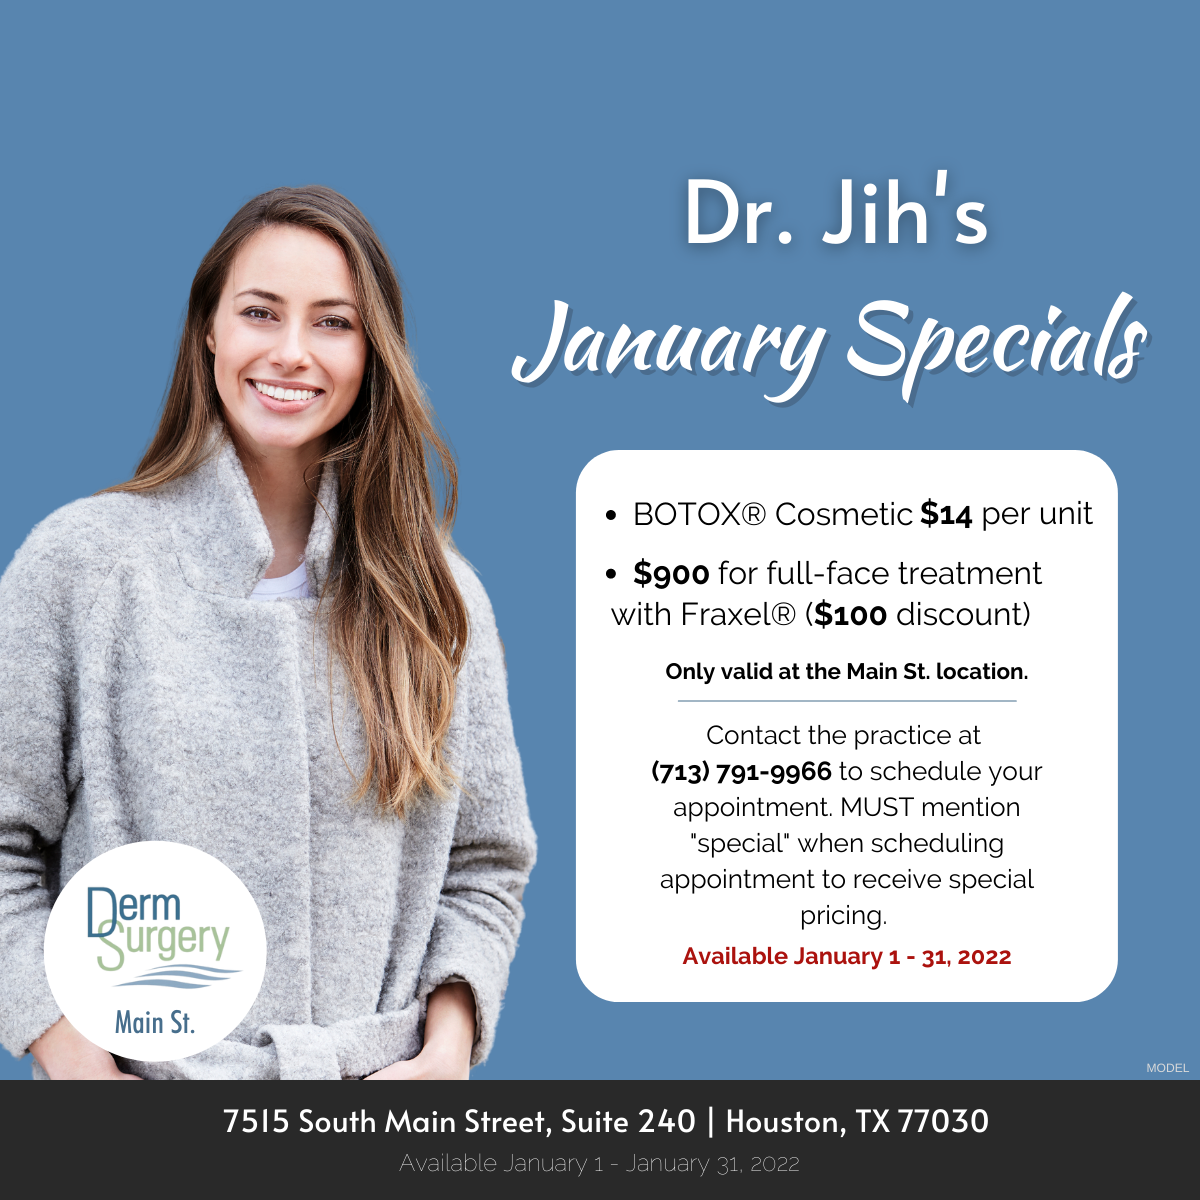 Dr. Jih's January Specials